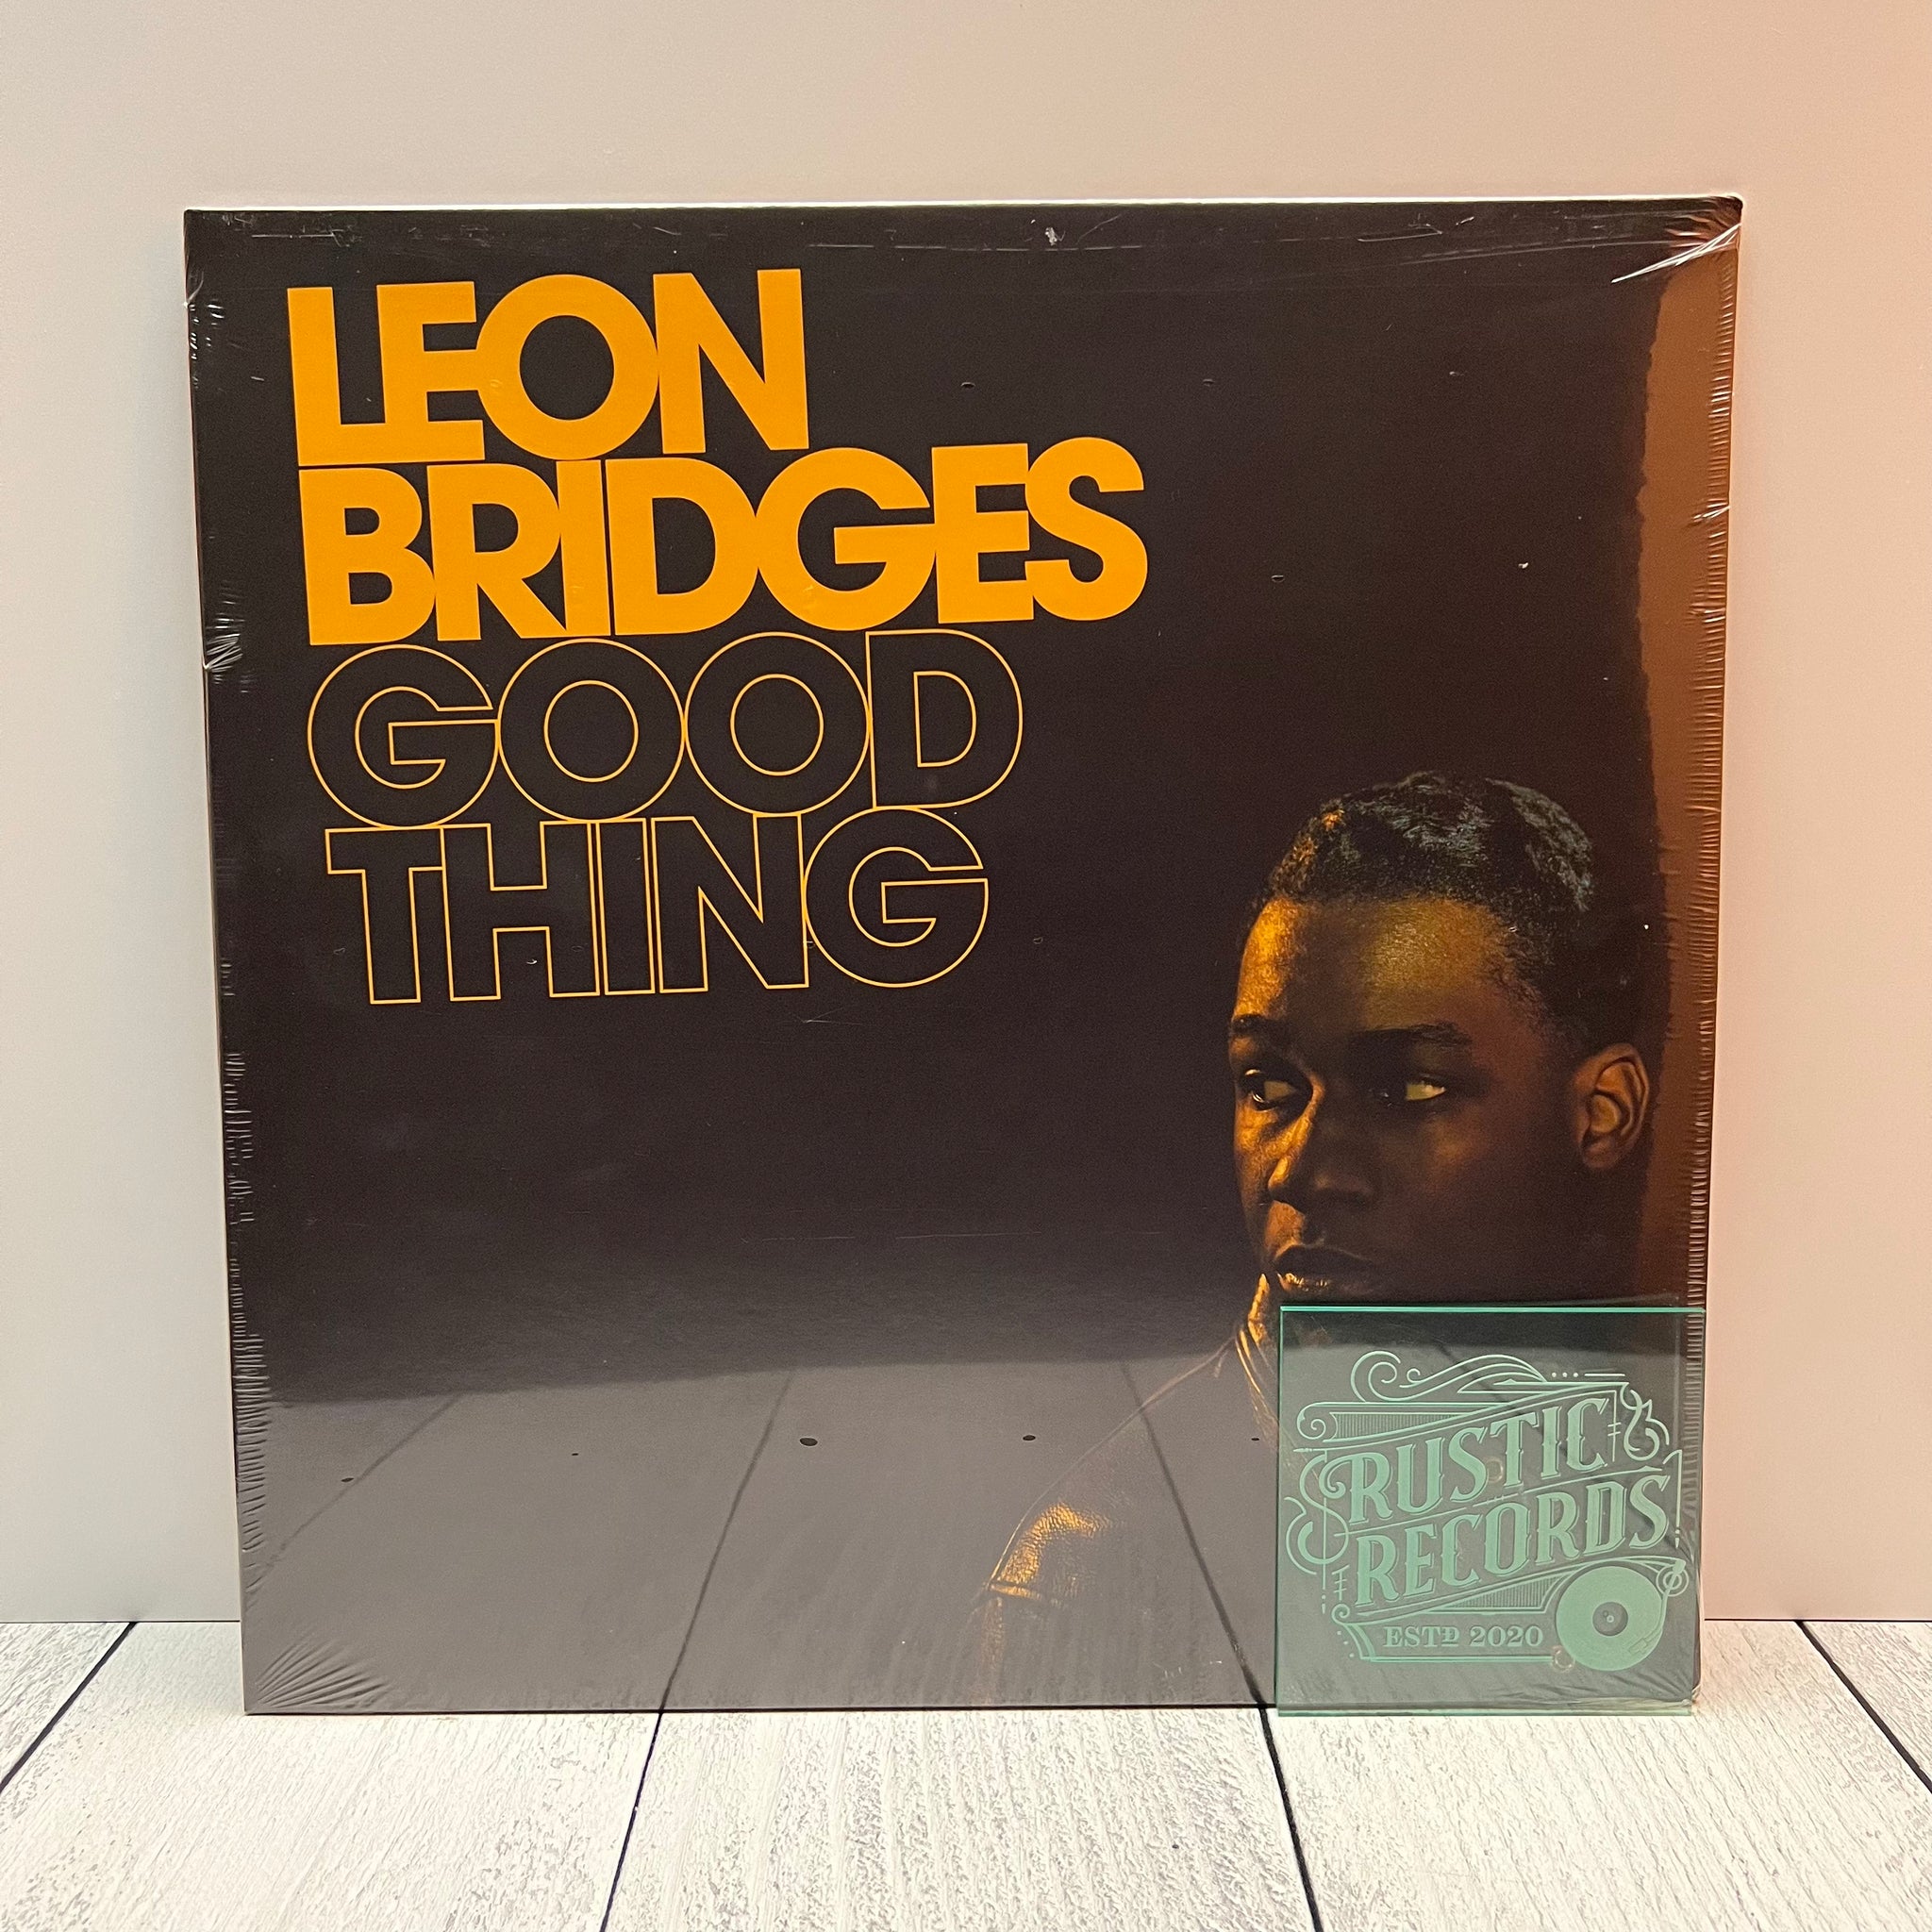 Leon Bridges - Good Thing (Yellow Vinyl)